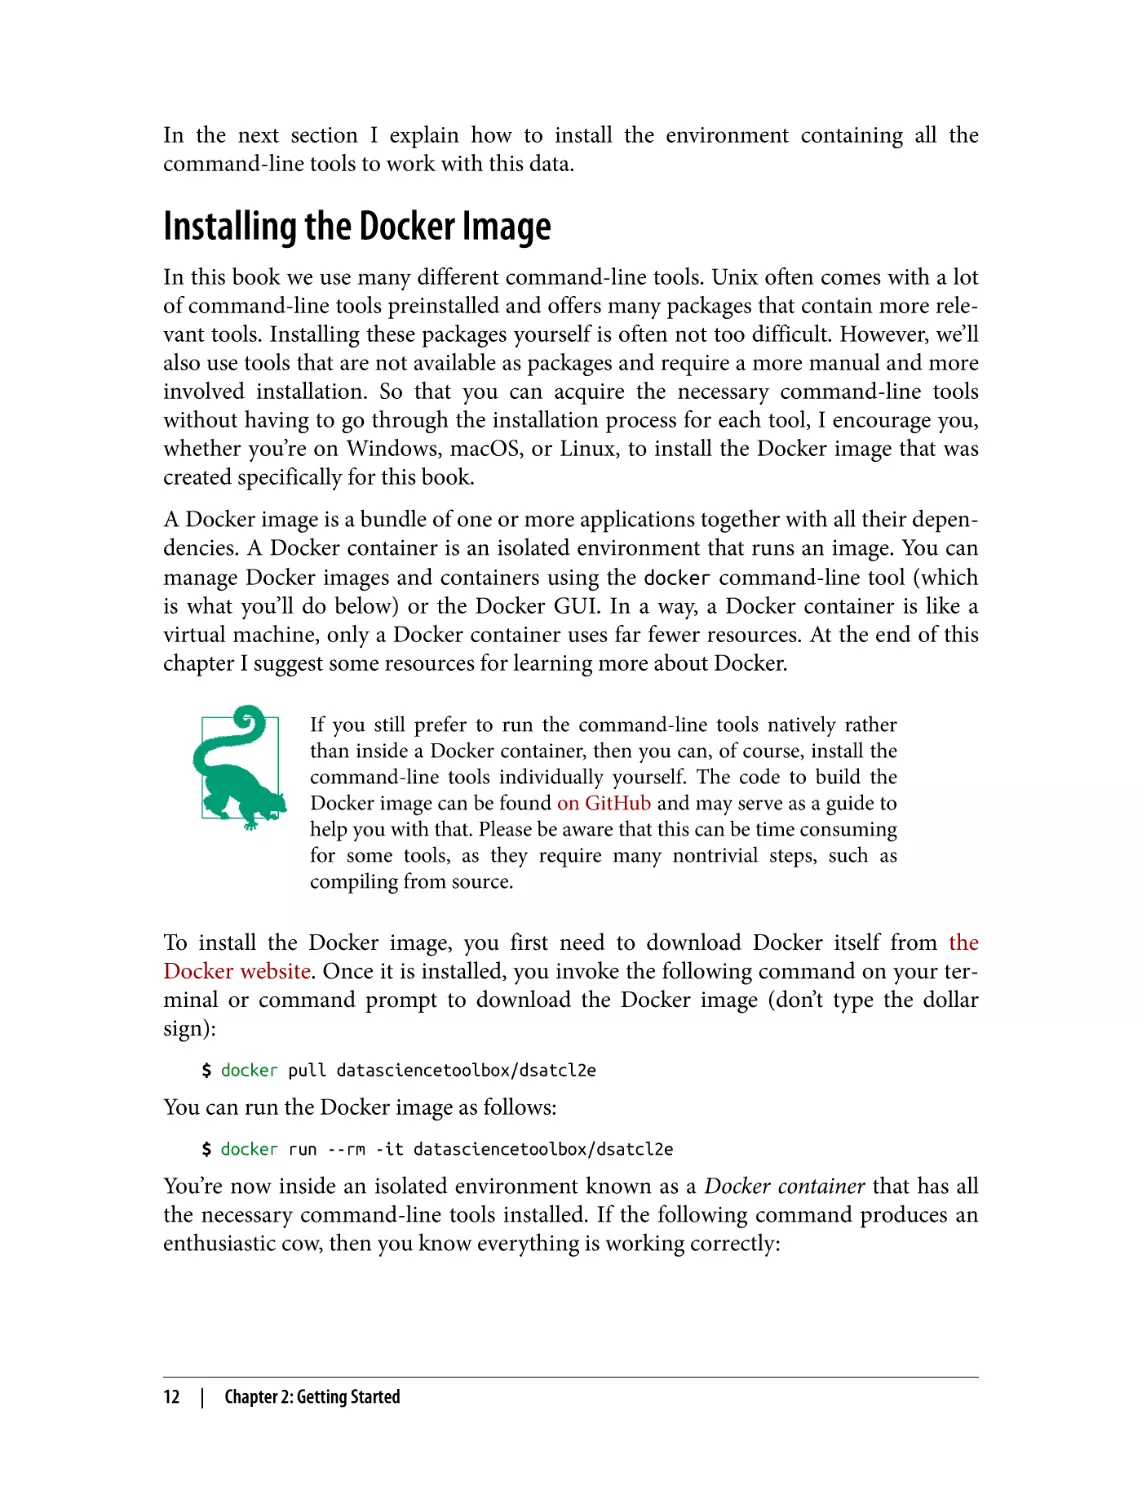 Installing the Docker Image